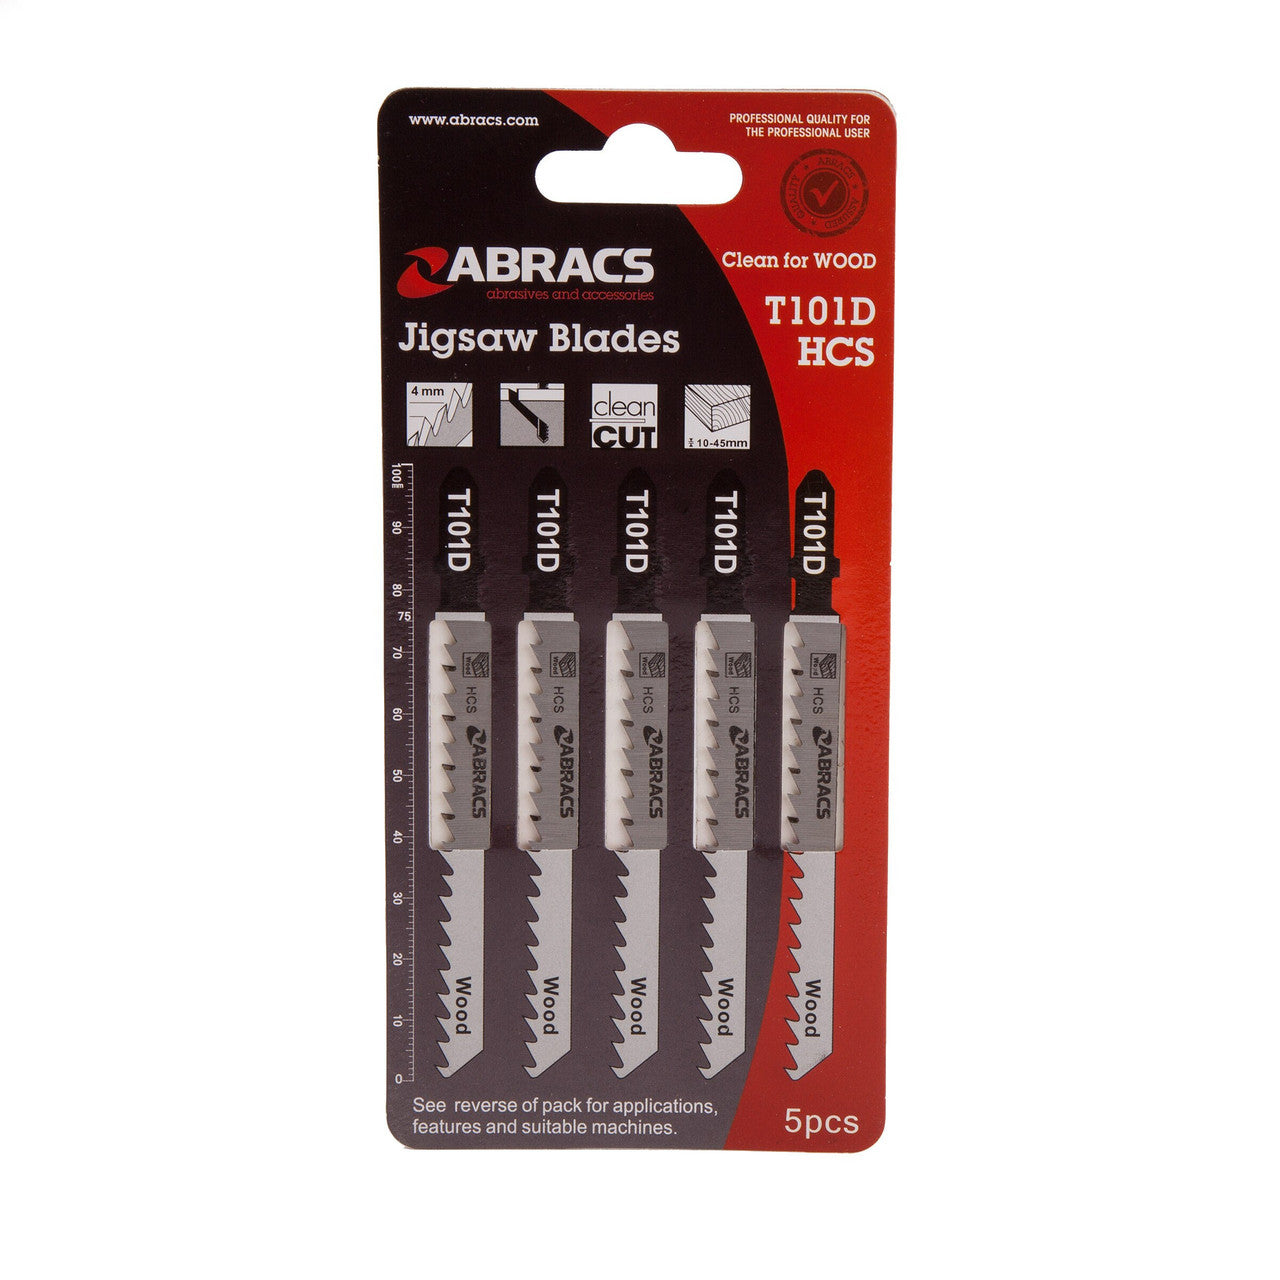 Abracs T101D Jigsaw Blades for Wood (5 Pack)